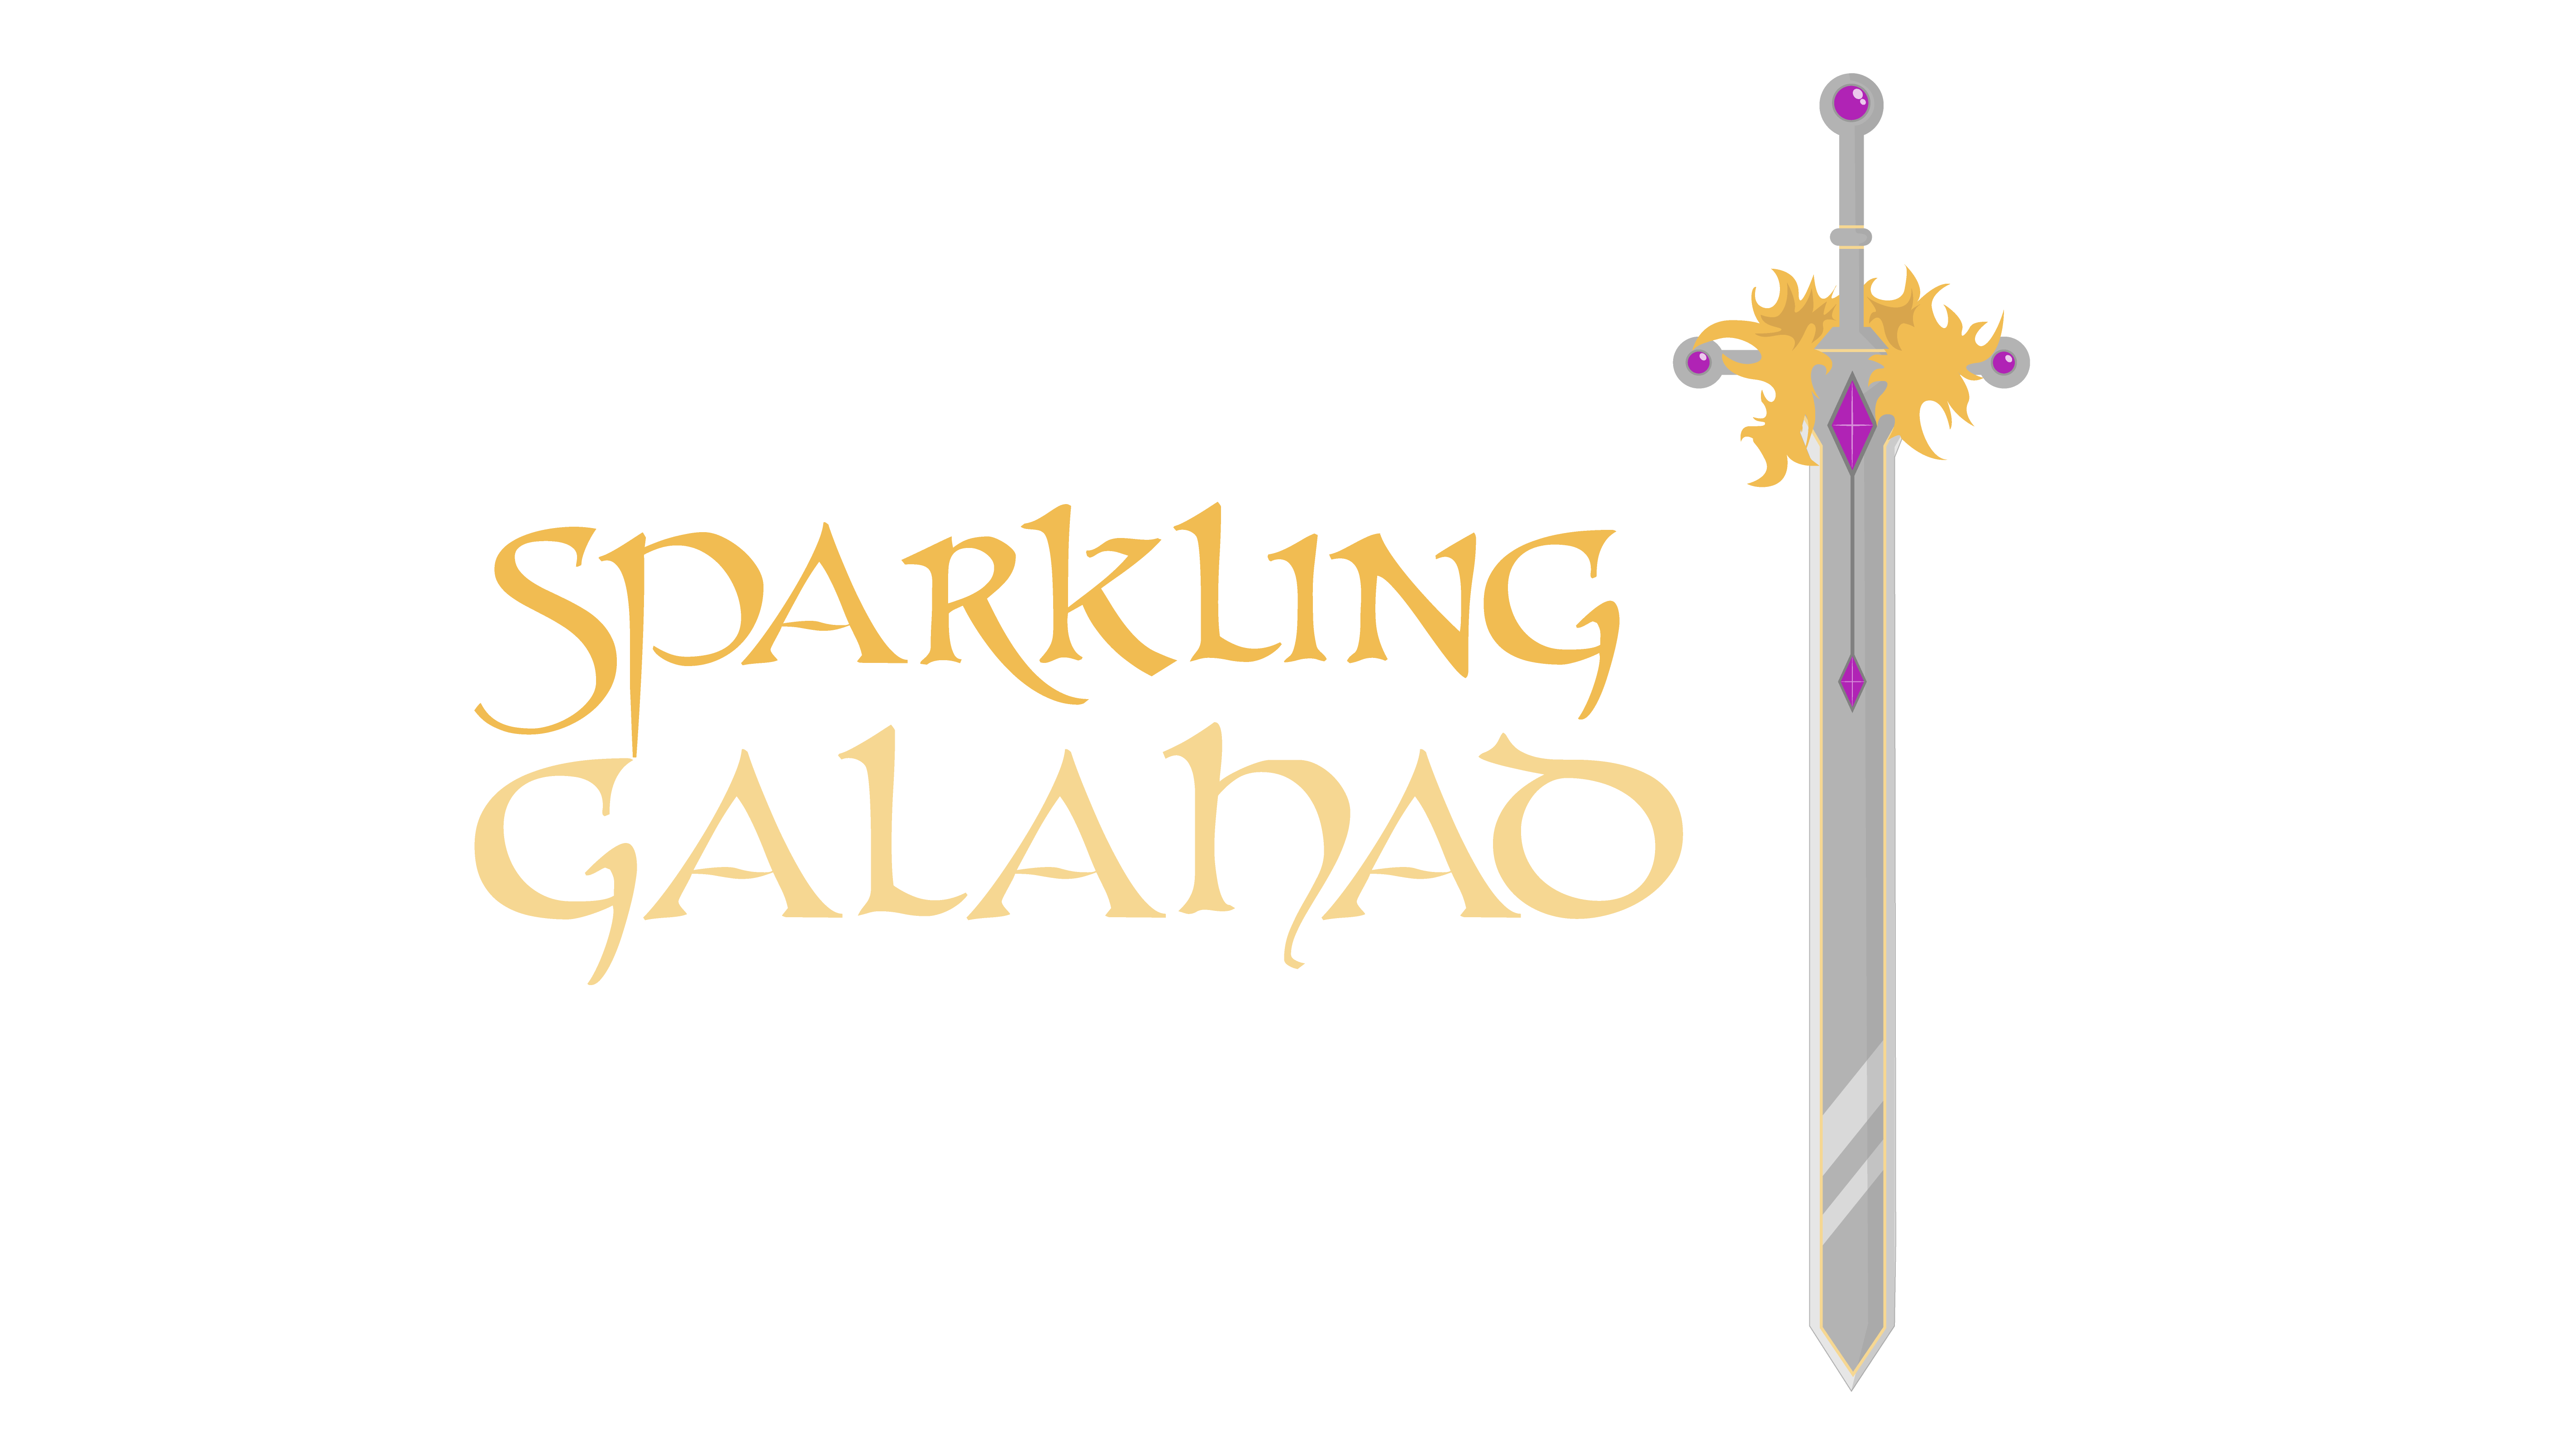 Sparkling Galahad